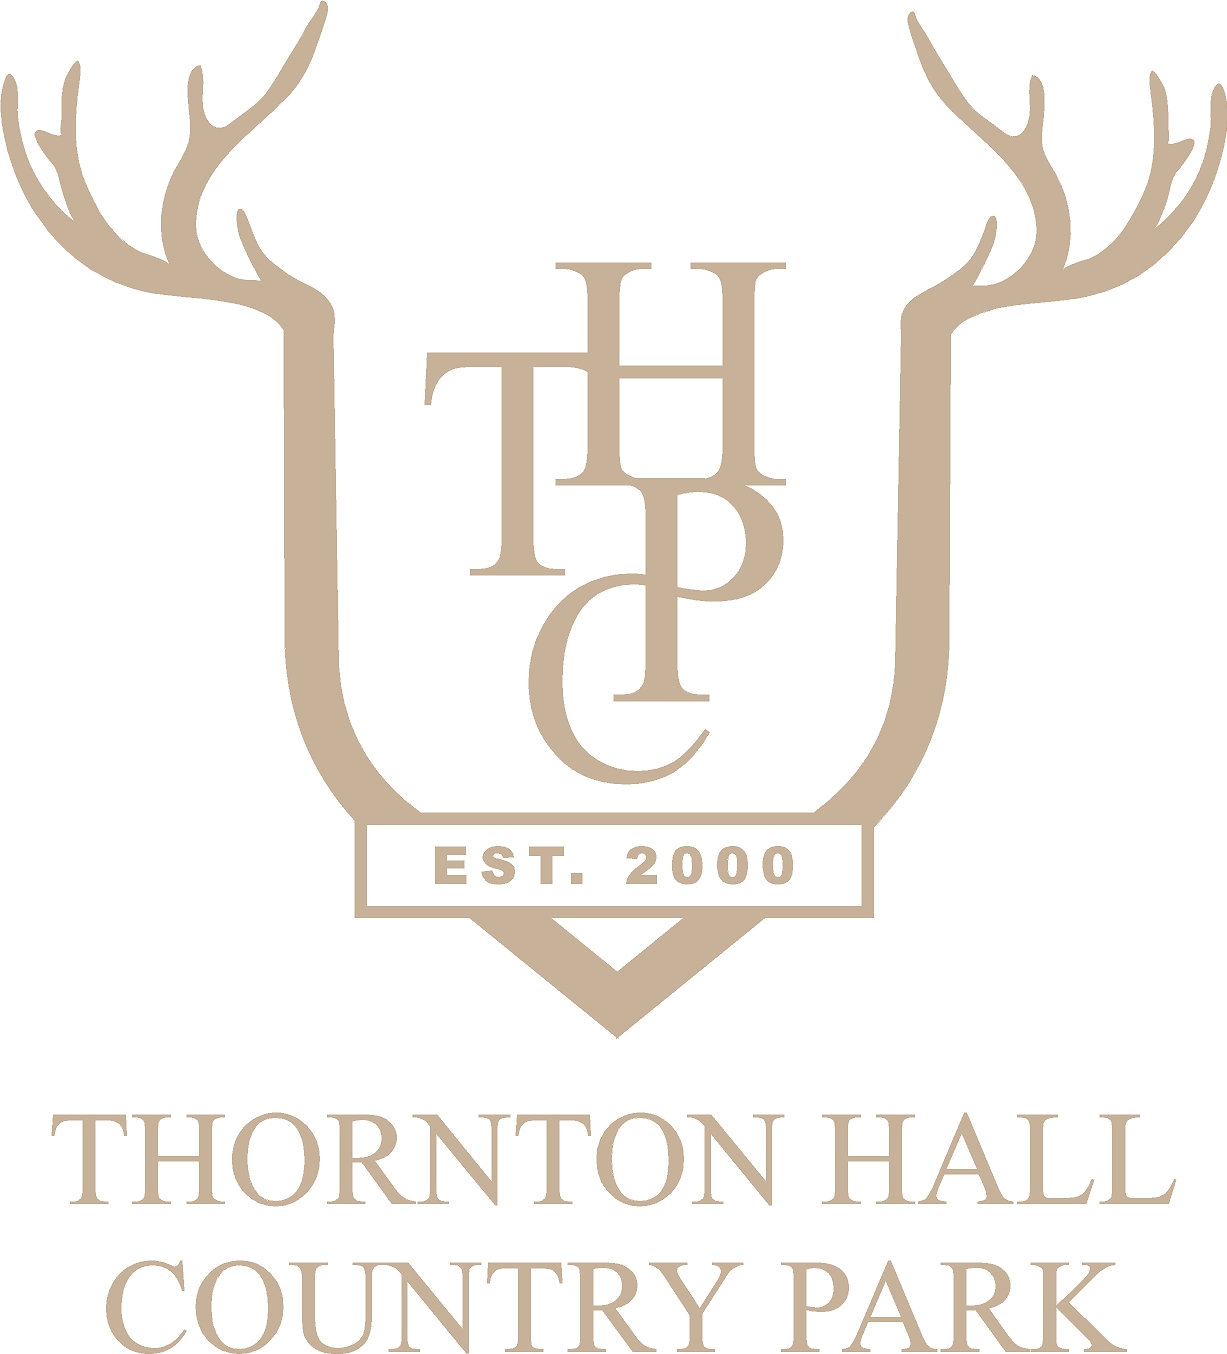 Thornton Hall Country Park